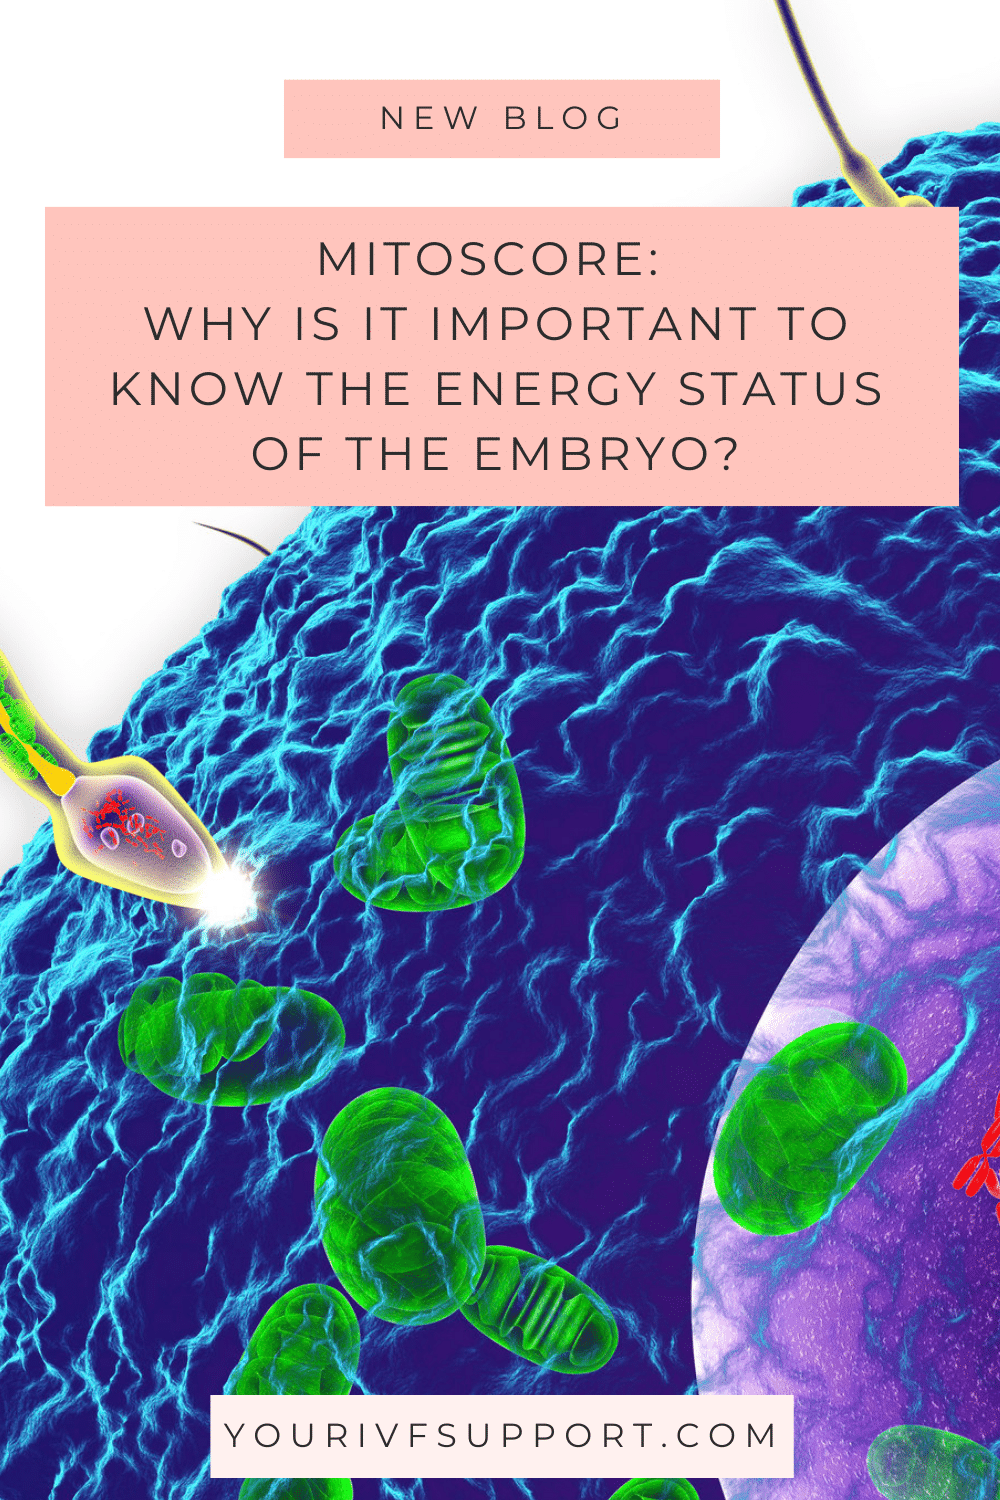 Mitoscore and Embryo Energy Status